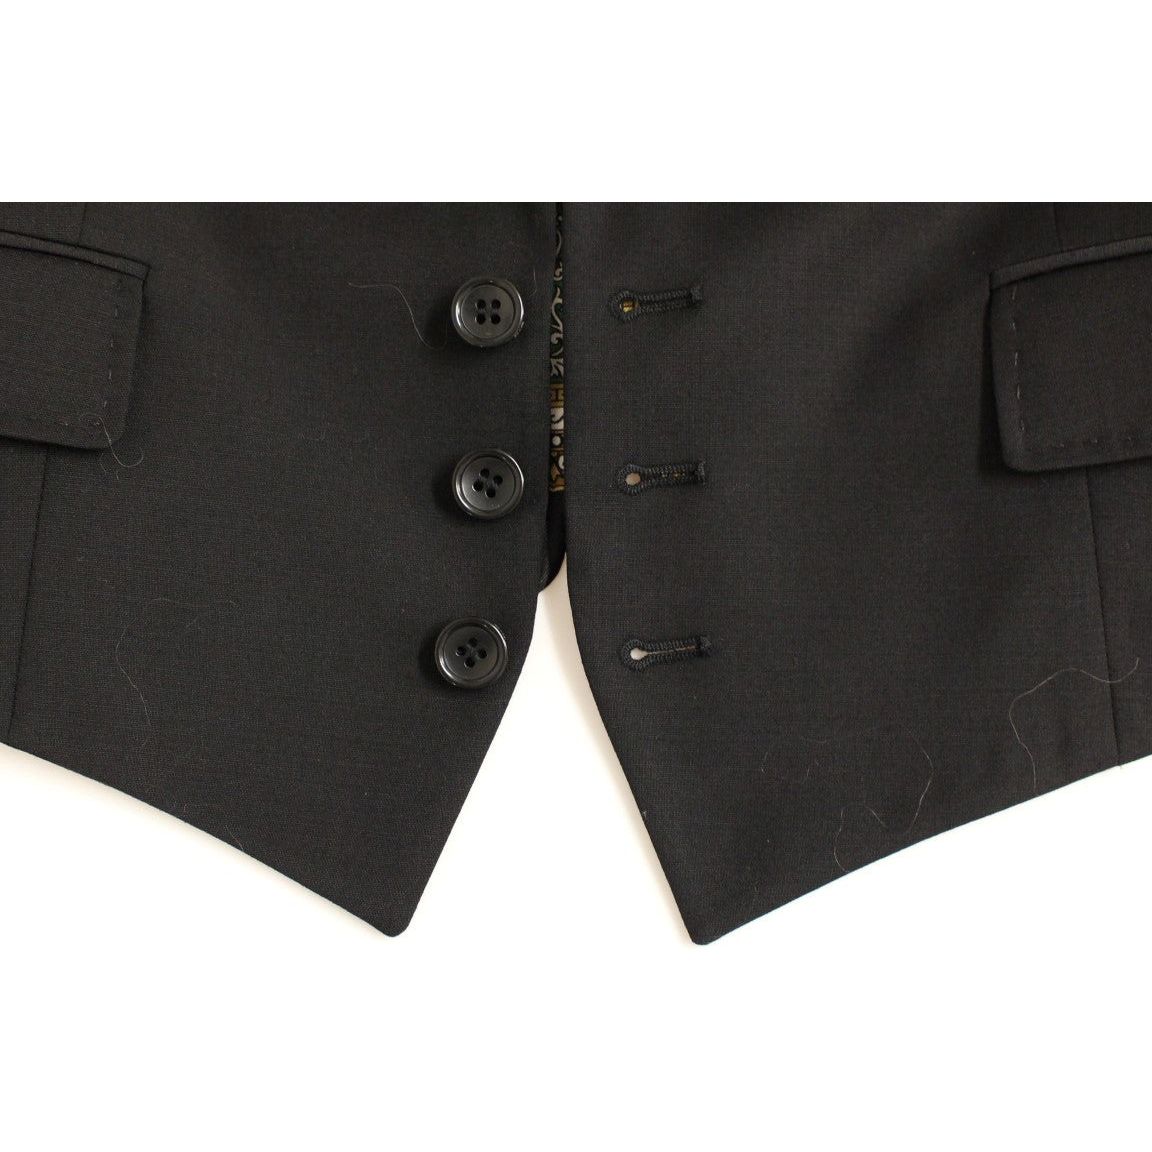 Dolce & Gabbana Elegant Silk-Blend Black Blazer with Scarf Back Detail Blazer jacket black-silk-scarf-back-blazer-jacket 217019-black-silk-scarf-back-blazer-jacket-6.jpg